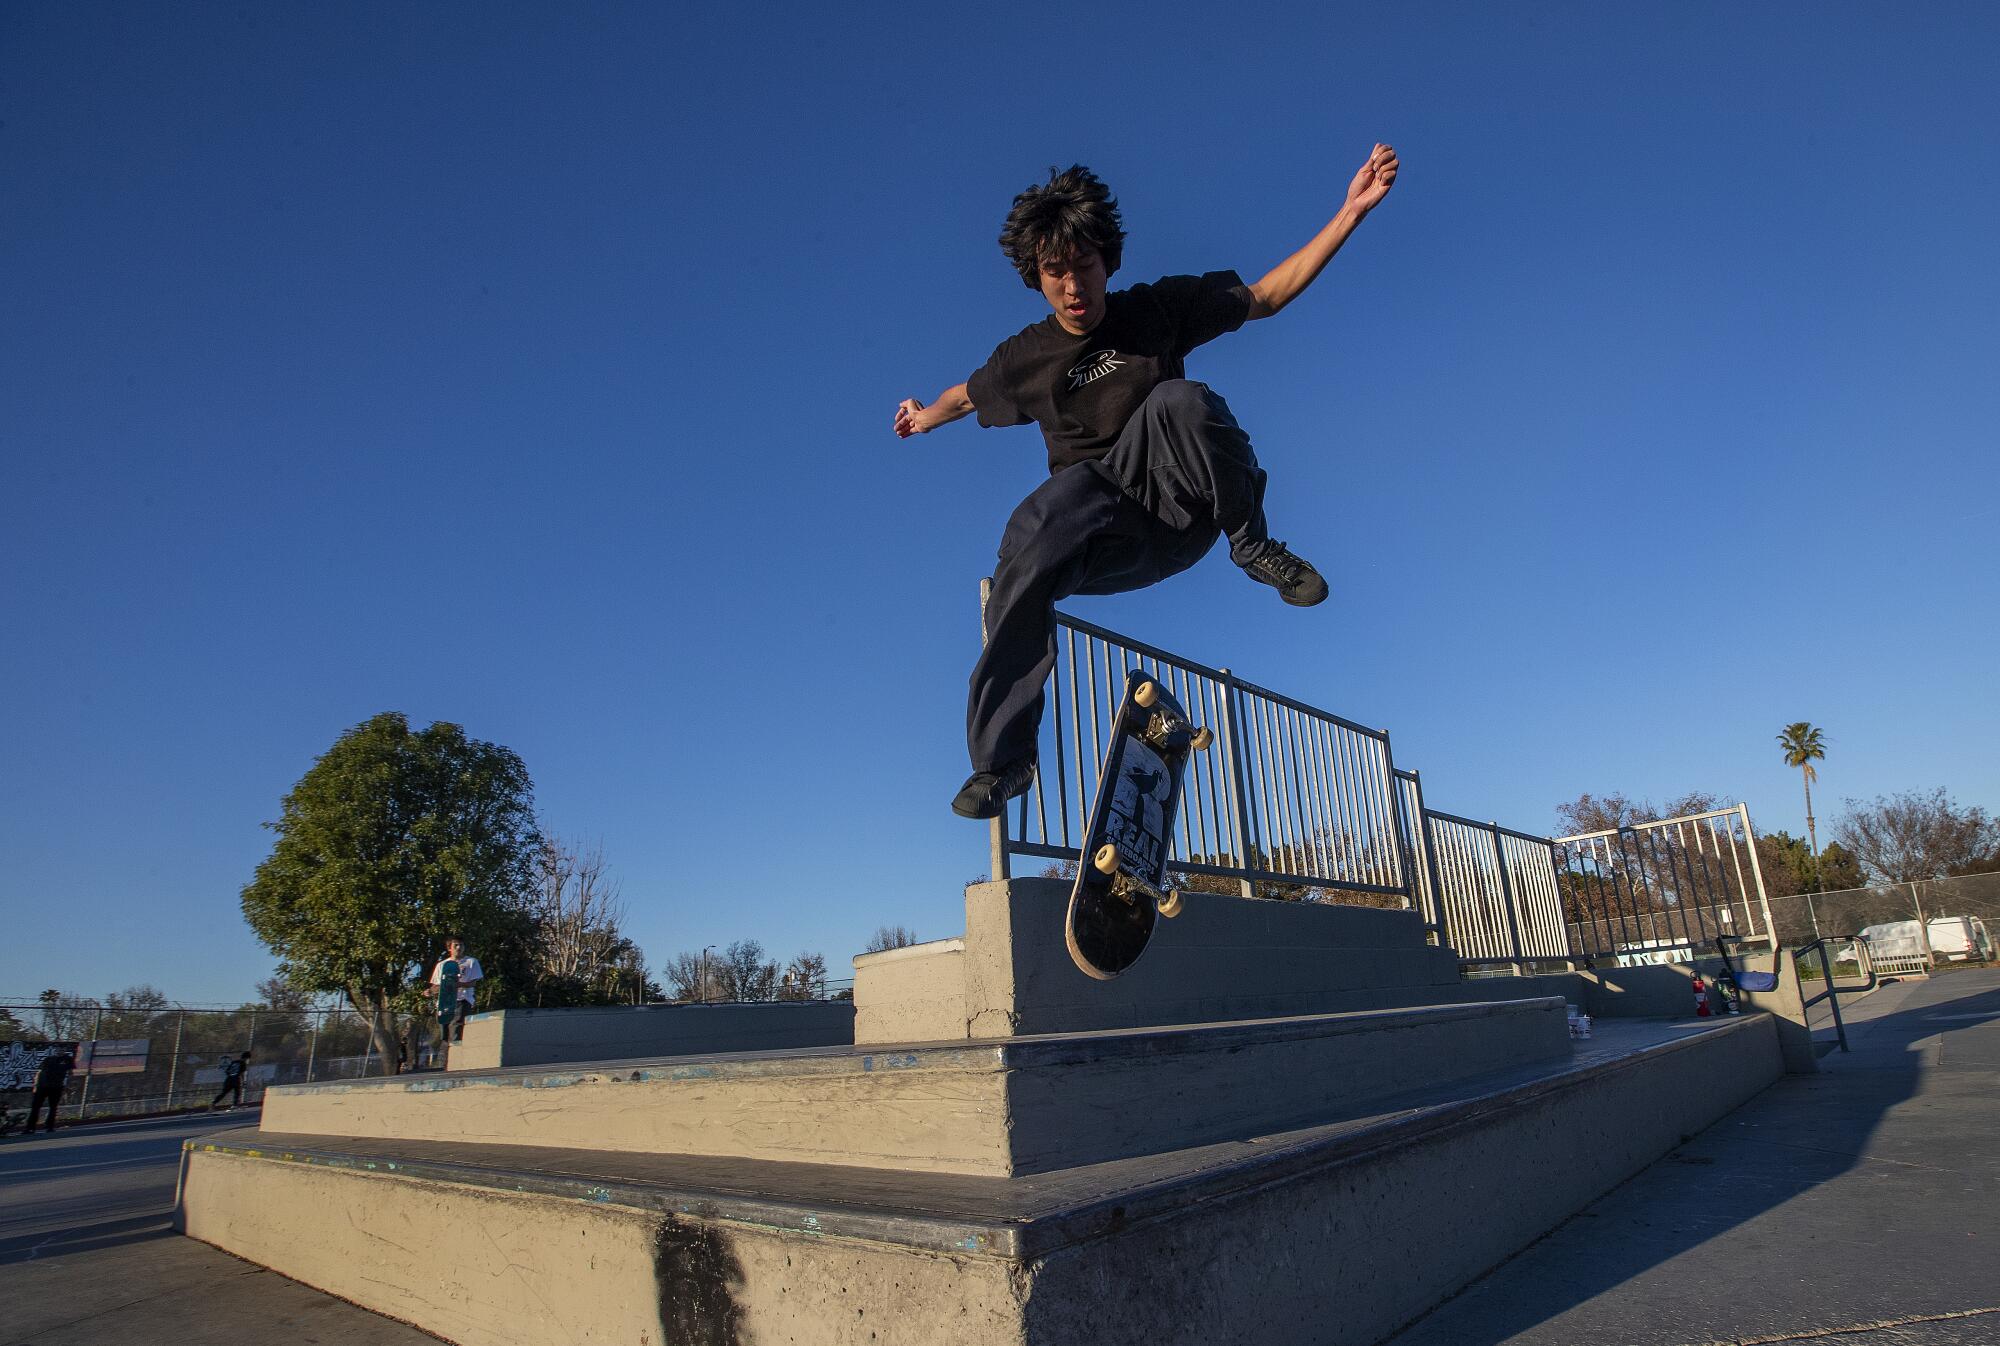 Luna Luna, 19, of Reseda, practices a hardflip while skateboarding at Pedlow Skate Park in Encino.